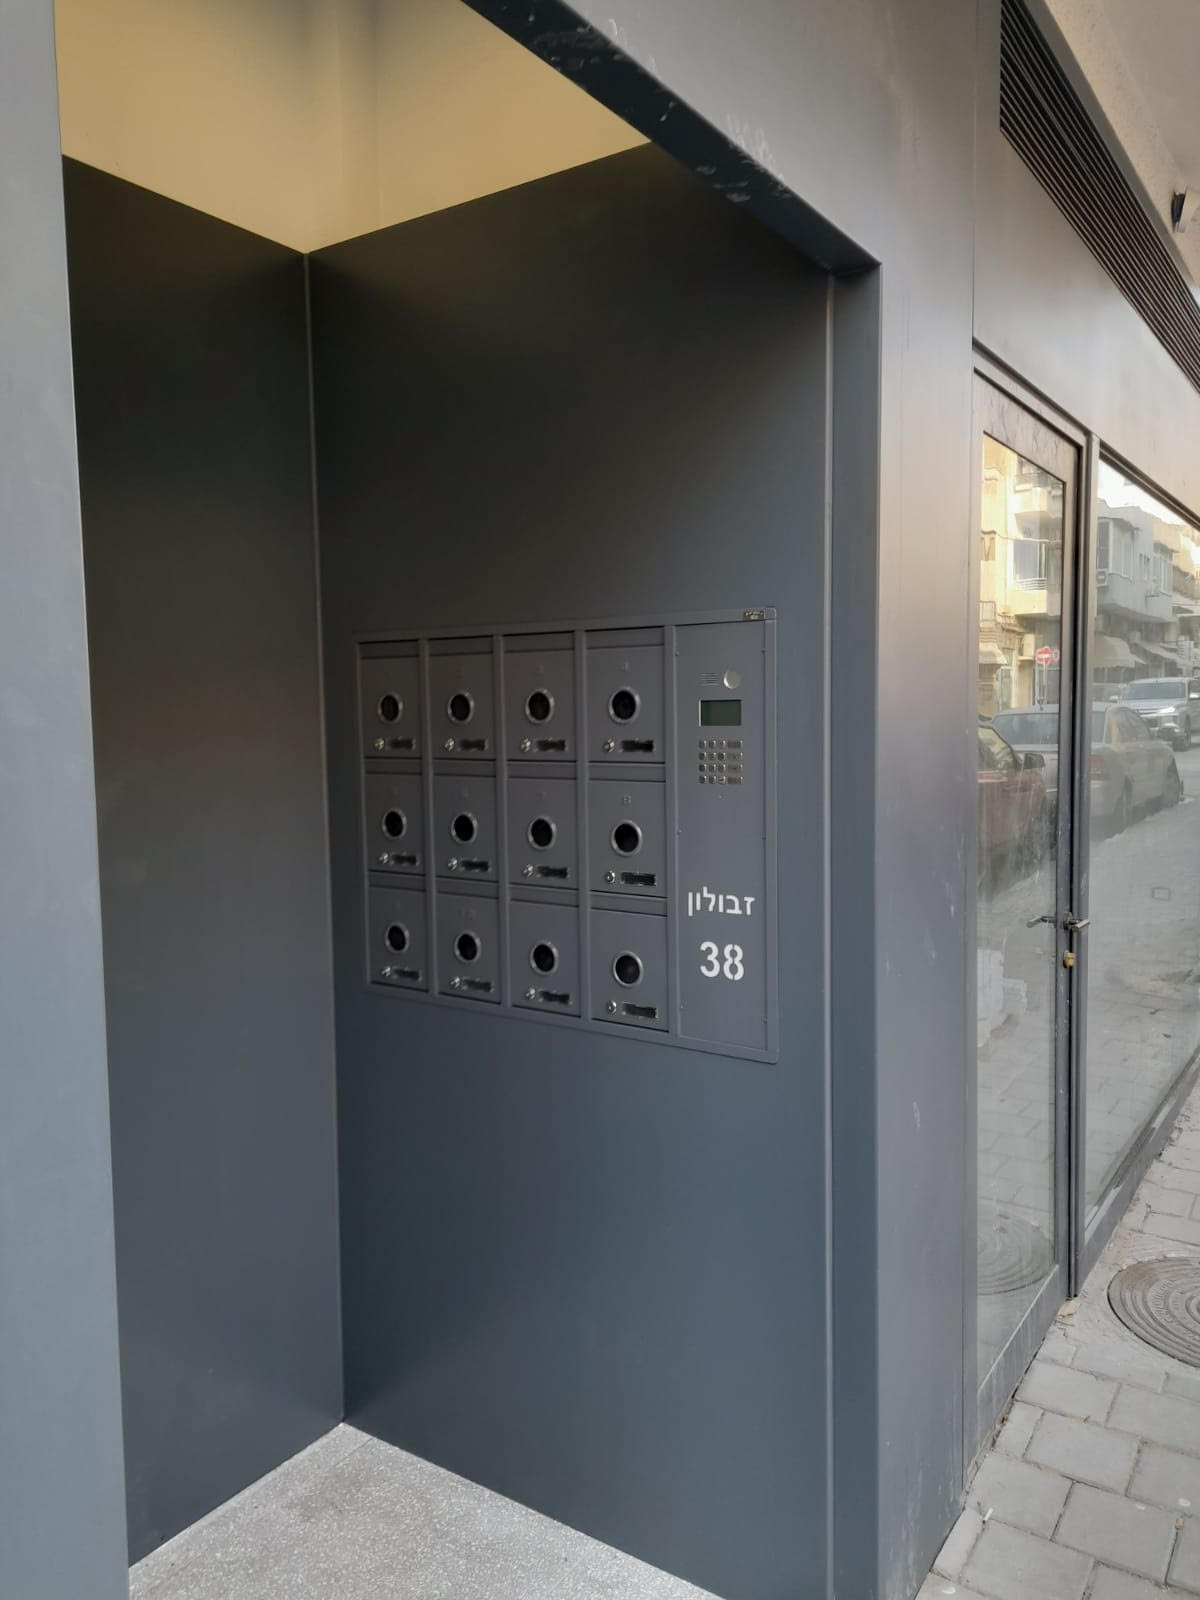 Embedded intercom system in a mailbox